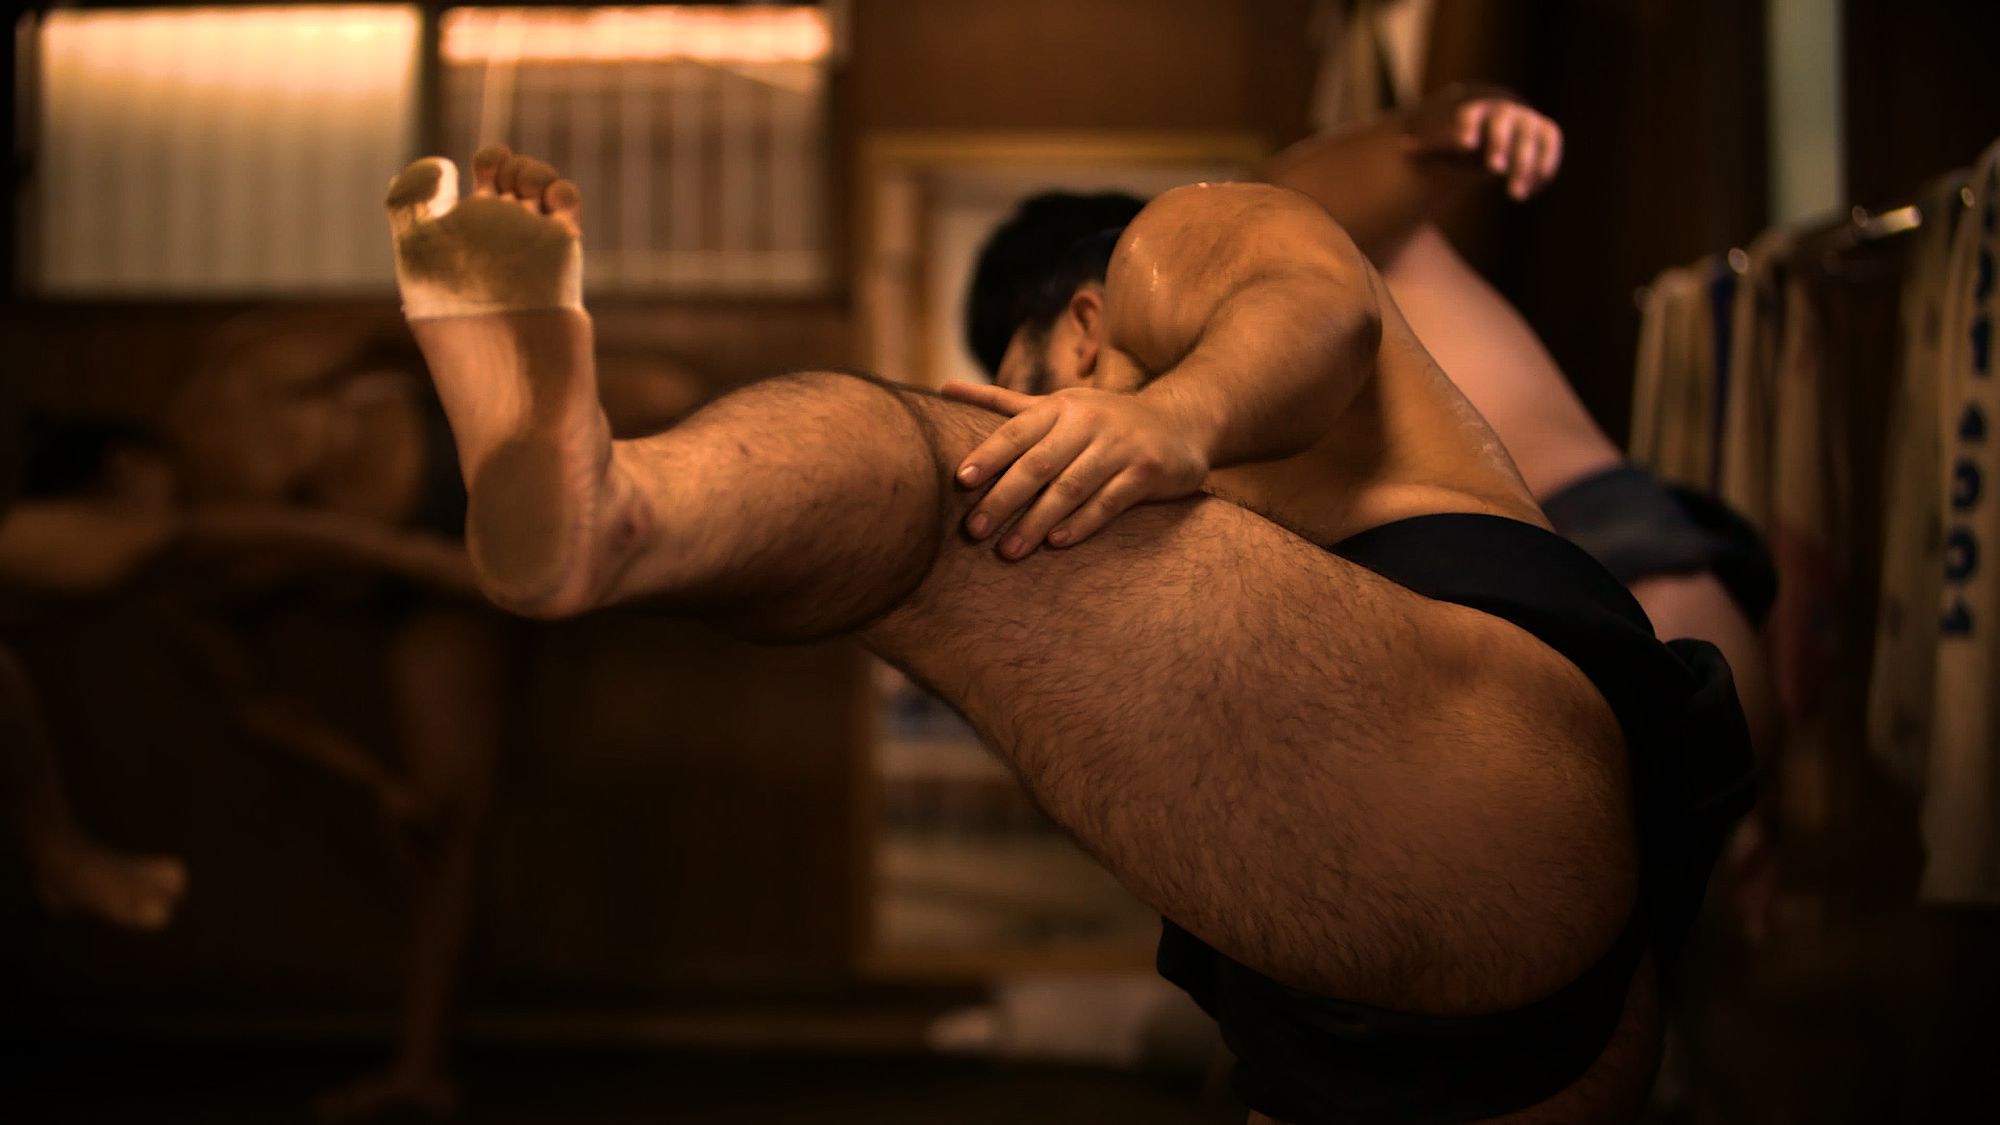 The sumo thigh slap